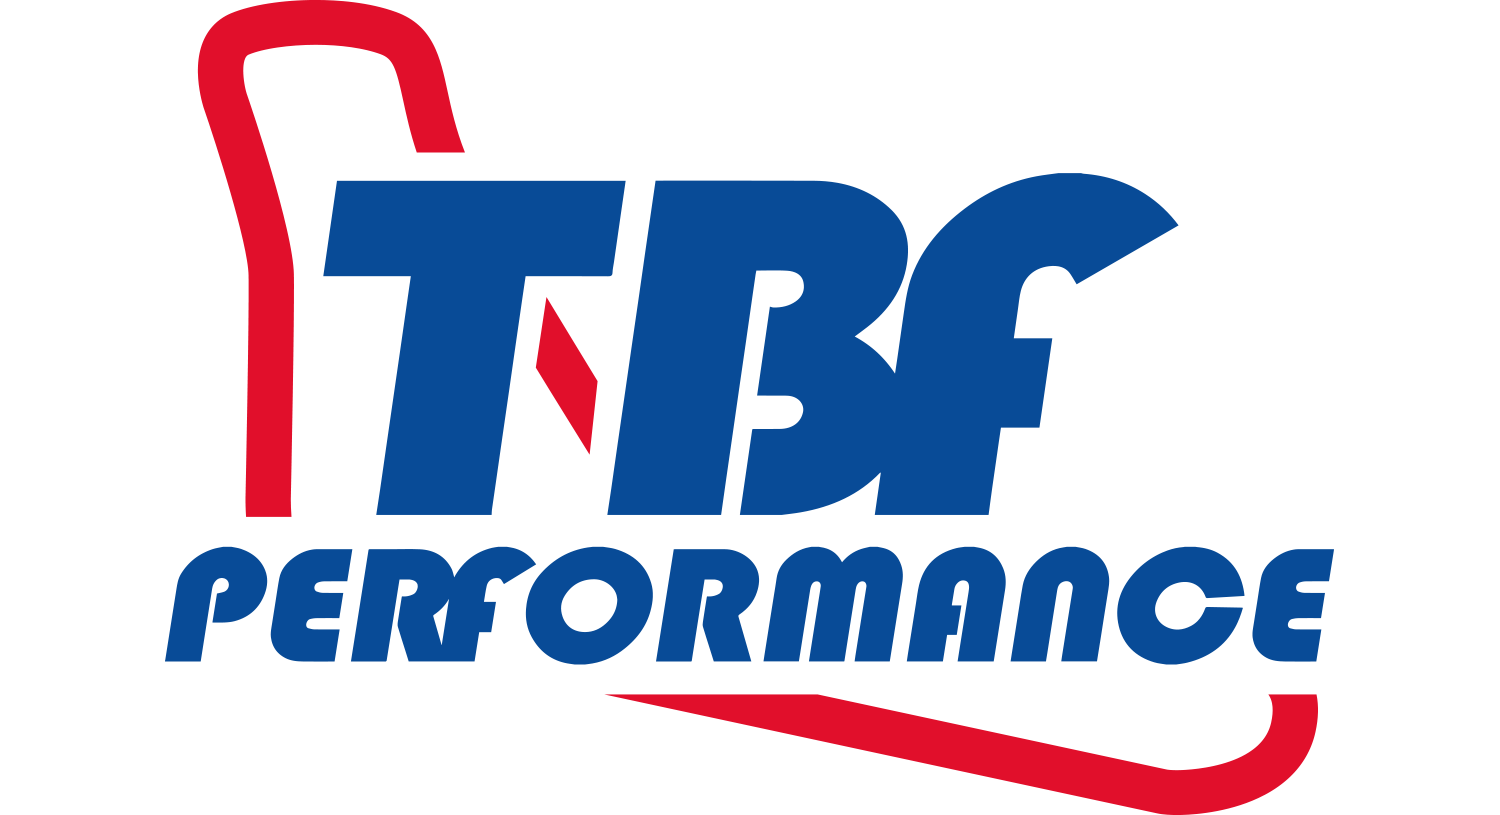 TBF Performance